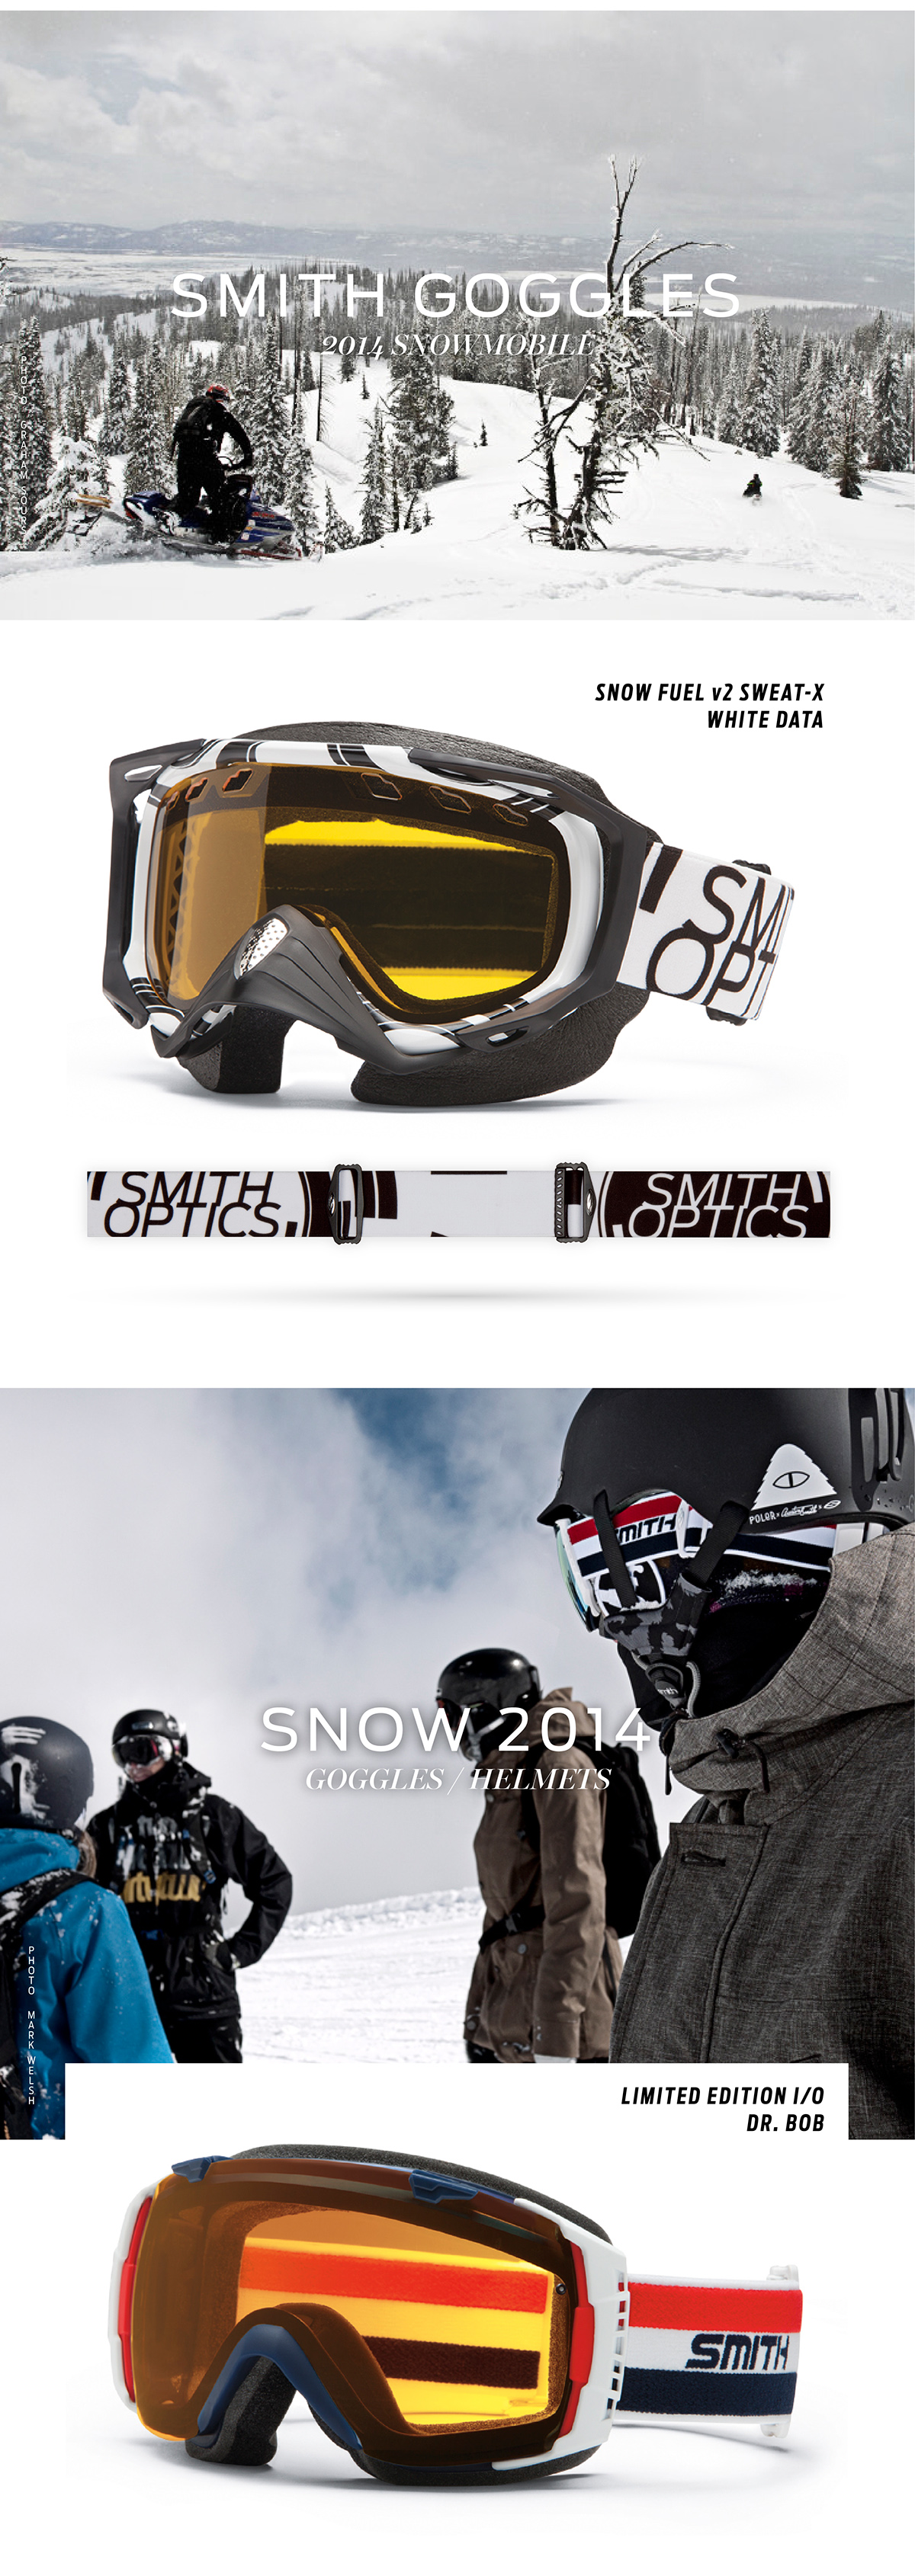 design smith goggles helmets snow Ski snowboard product optics eyes print Idaho Sun Valley doctor Bob